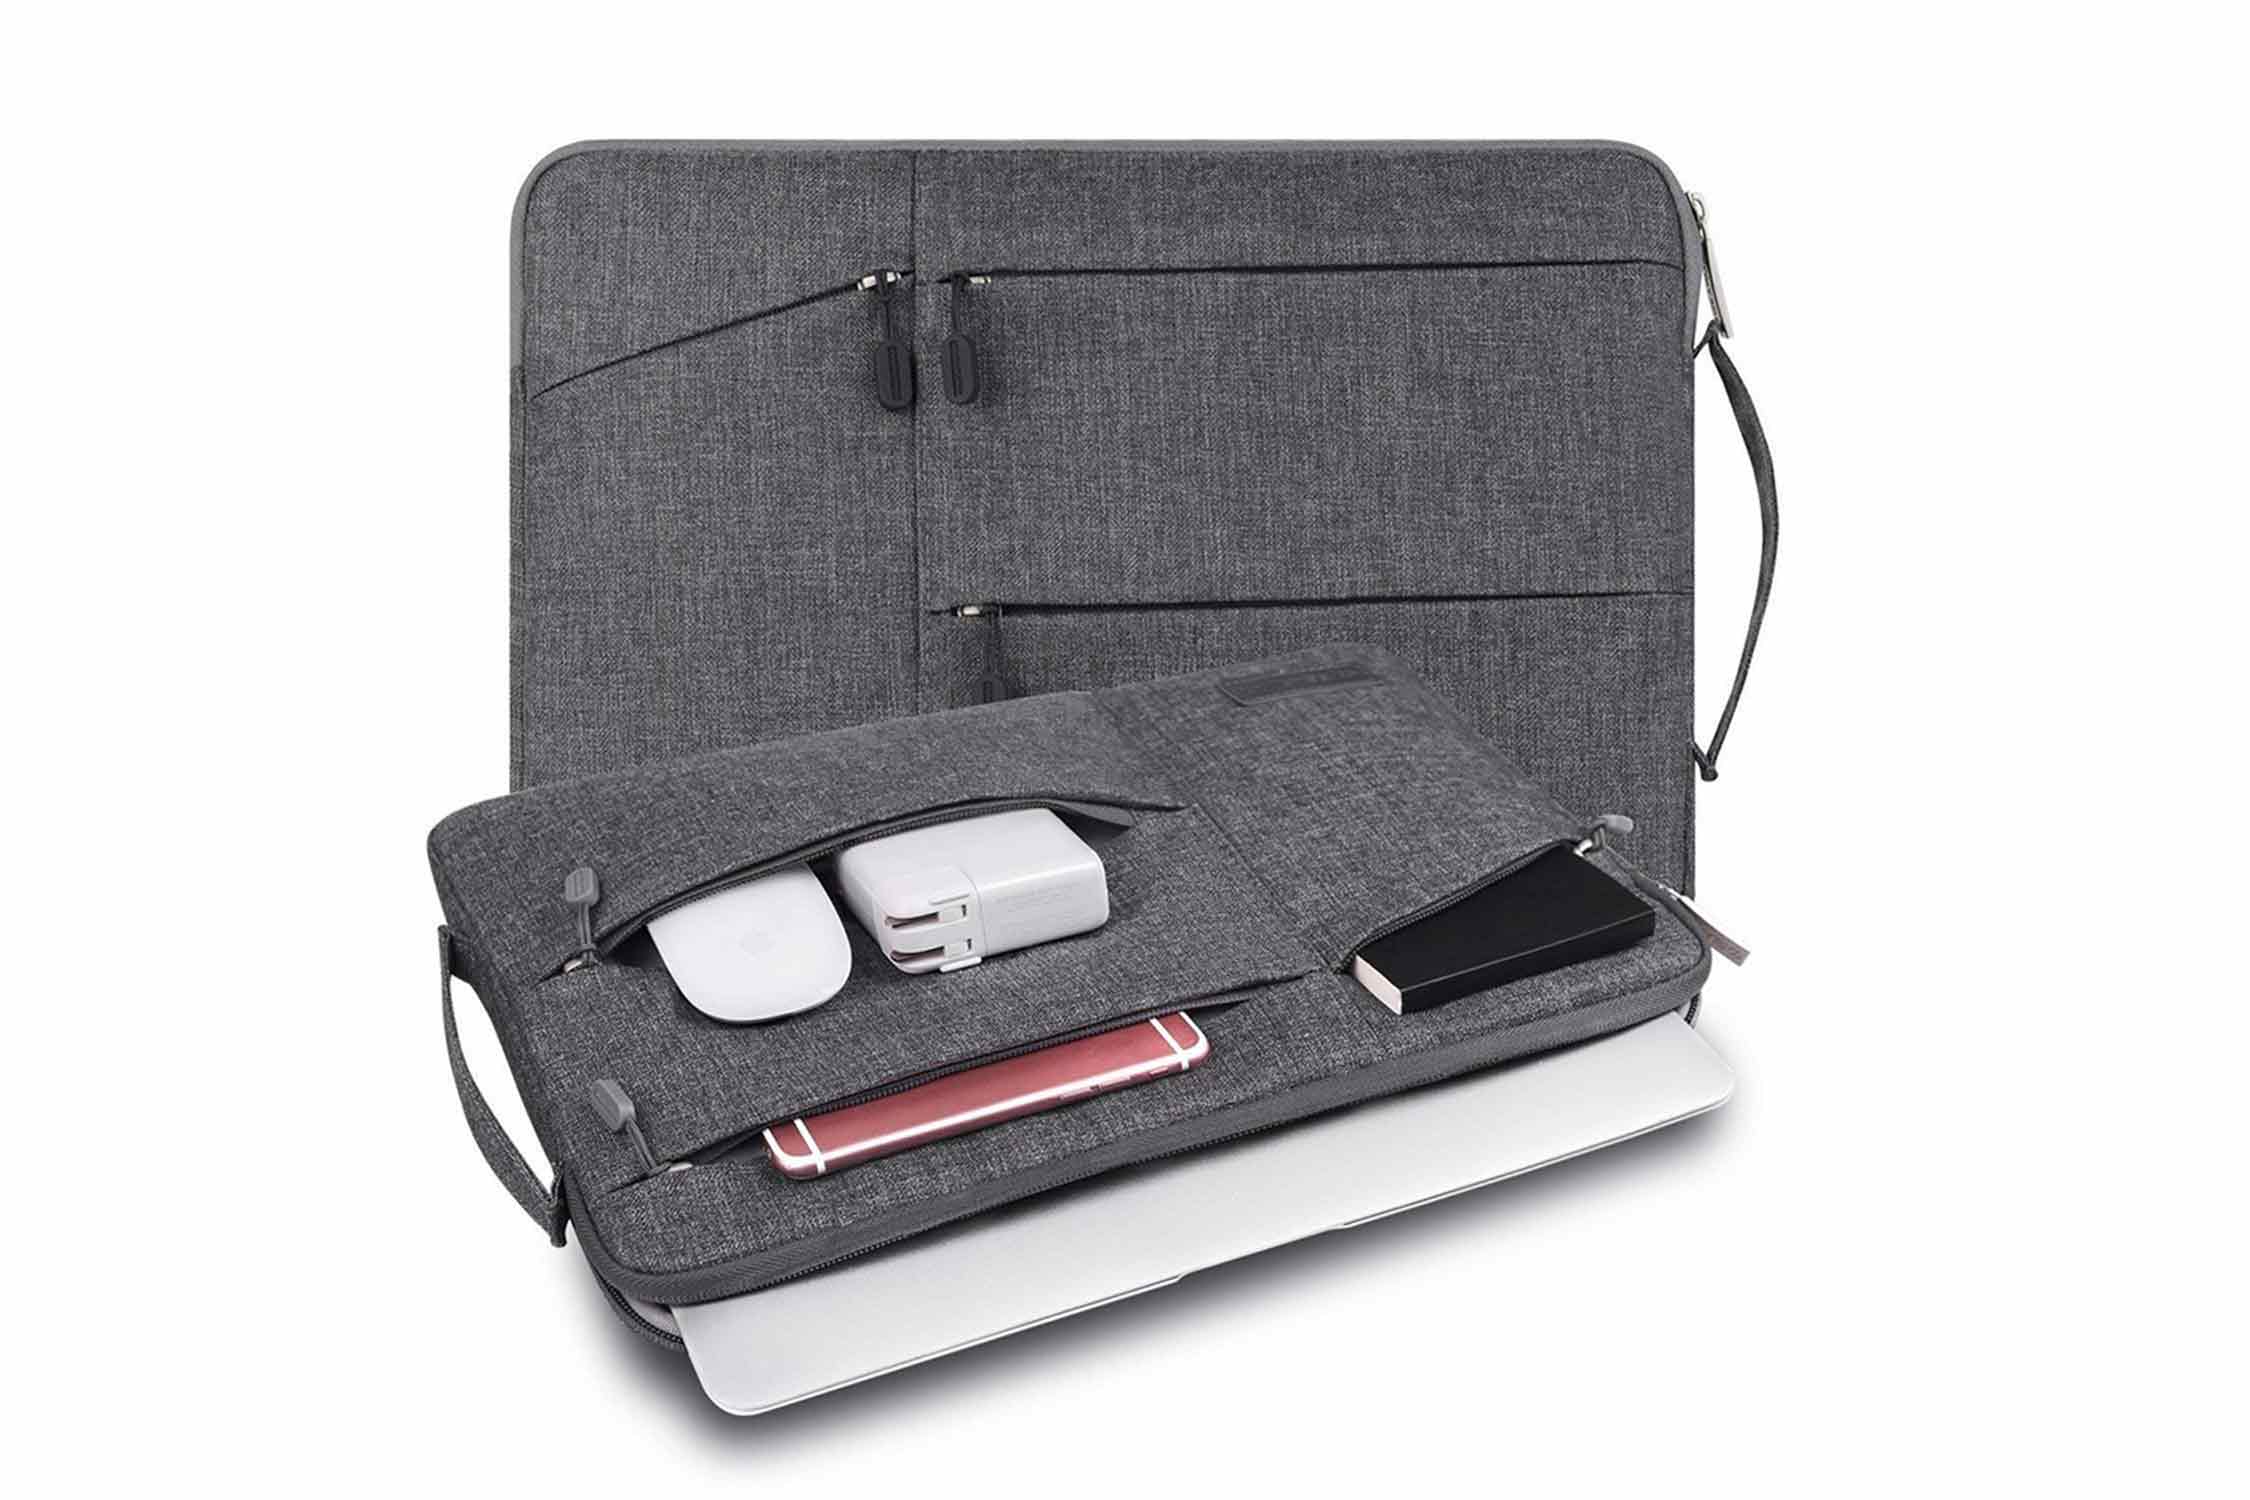 Macbook Airの持ち運びに便利なケースおすすめ10選 Amazonで人気ランキングを調査